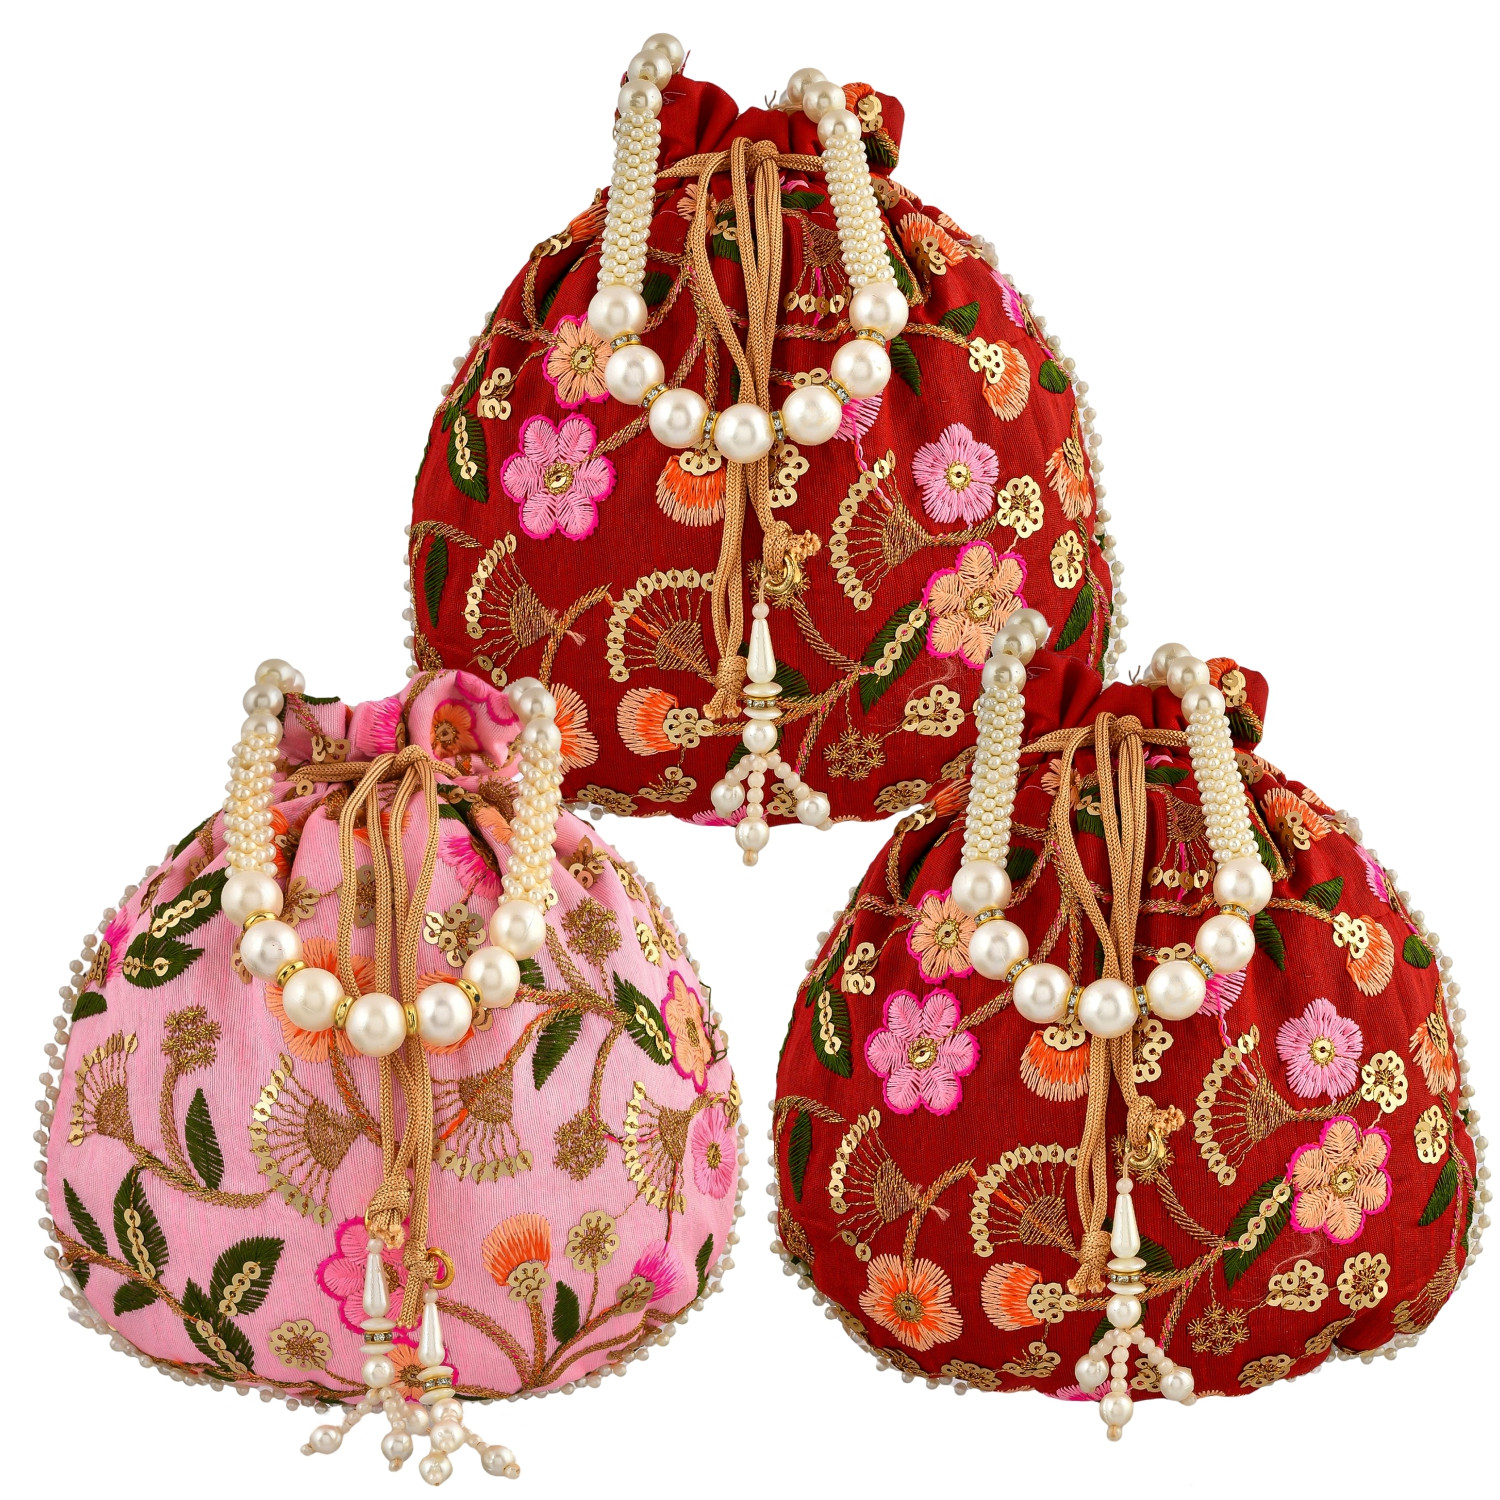 Kuber Industries Potli | Silk Wedding Potli | Christmas Gift Potli | Baby Shower Potli | Traditional Shagun Potli | Drawstring with Beads Handle Potli | New Flower Embroidery Potli | Pack of 3 | Multi